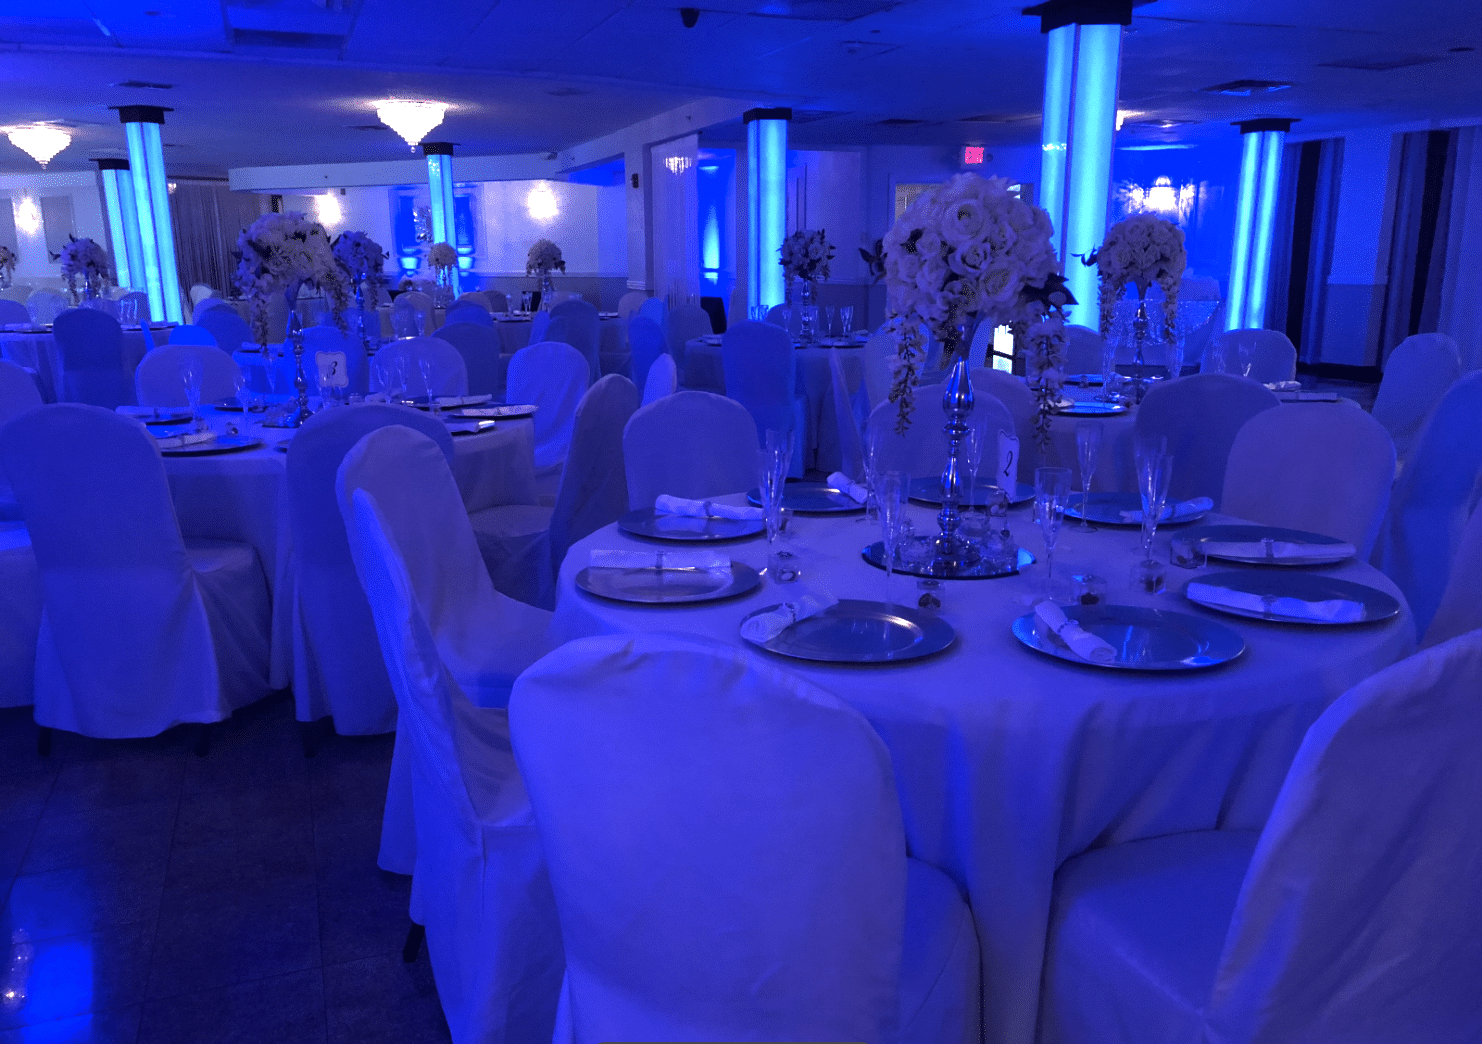 Seaquel Place Banquet Hall - reception hall lit with blue columns